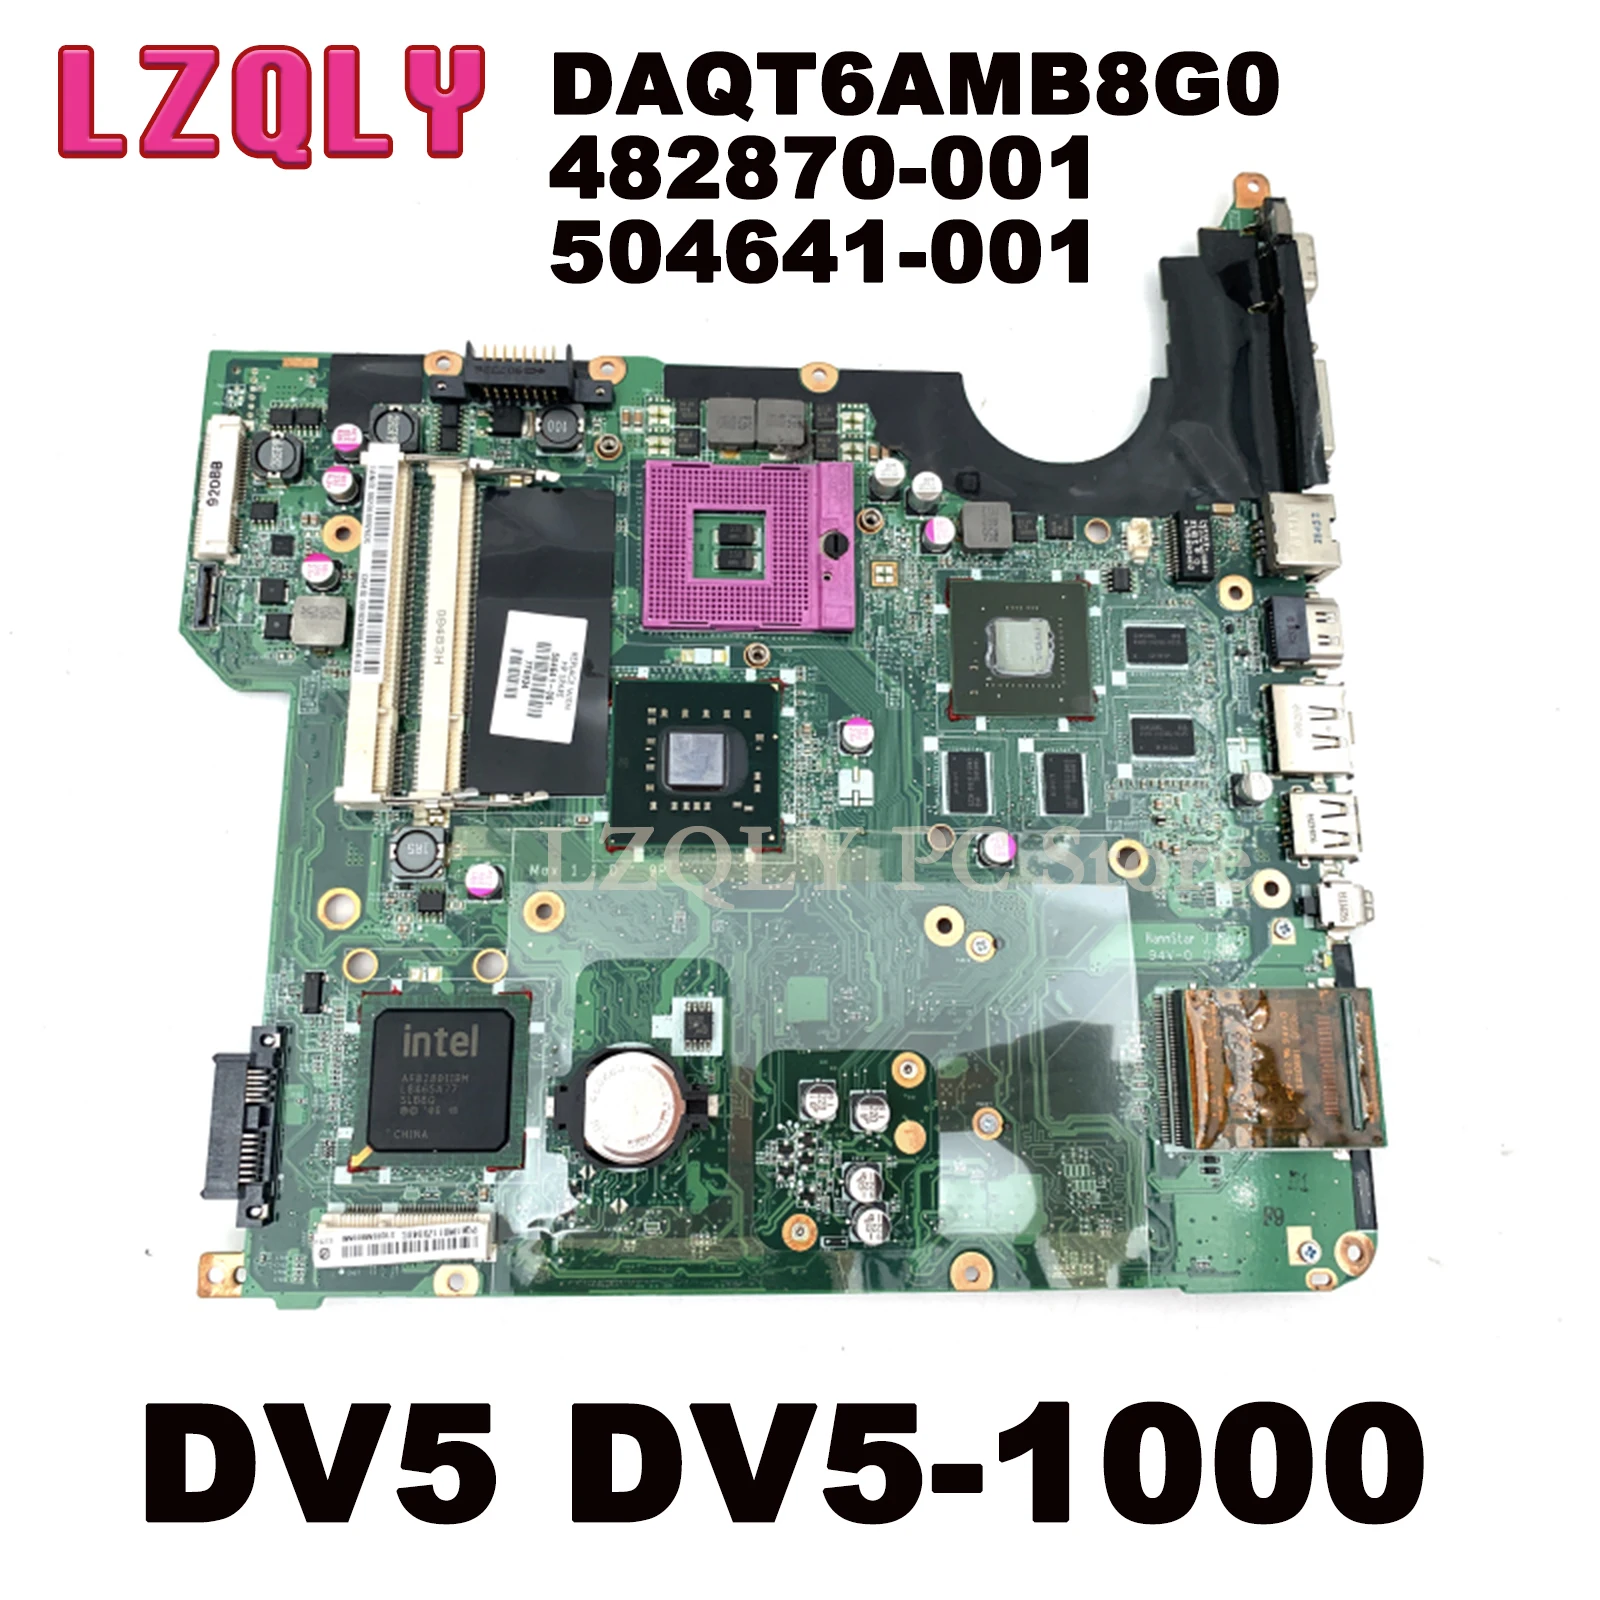 Купи LZQLY For HP DV5 DV5-1000 Motherboard With G96-630-A1 Video Card DAQT6AMB8G0 482870-001 504641-001 PM45 DDR2 Free CPU 1 Order за 2,400 рублей в магазине AliExpress